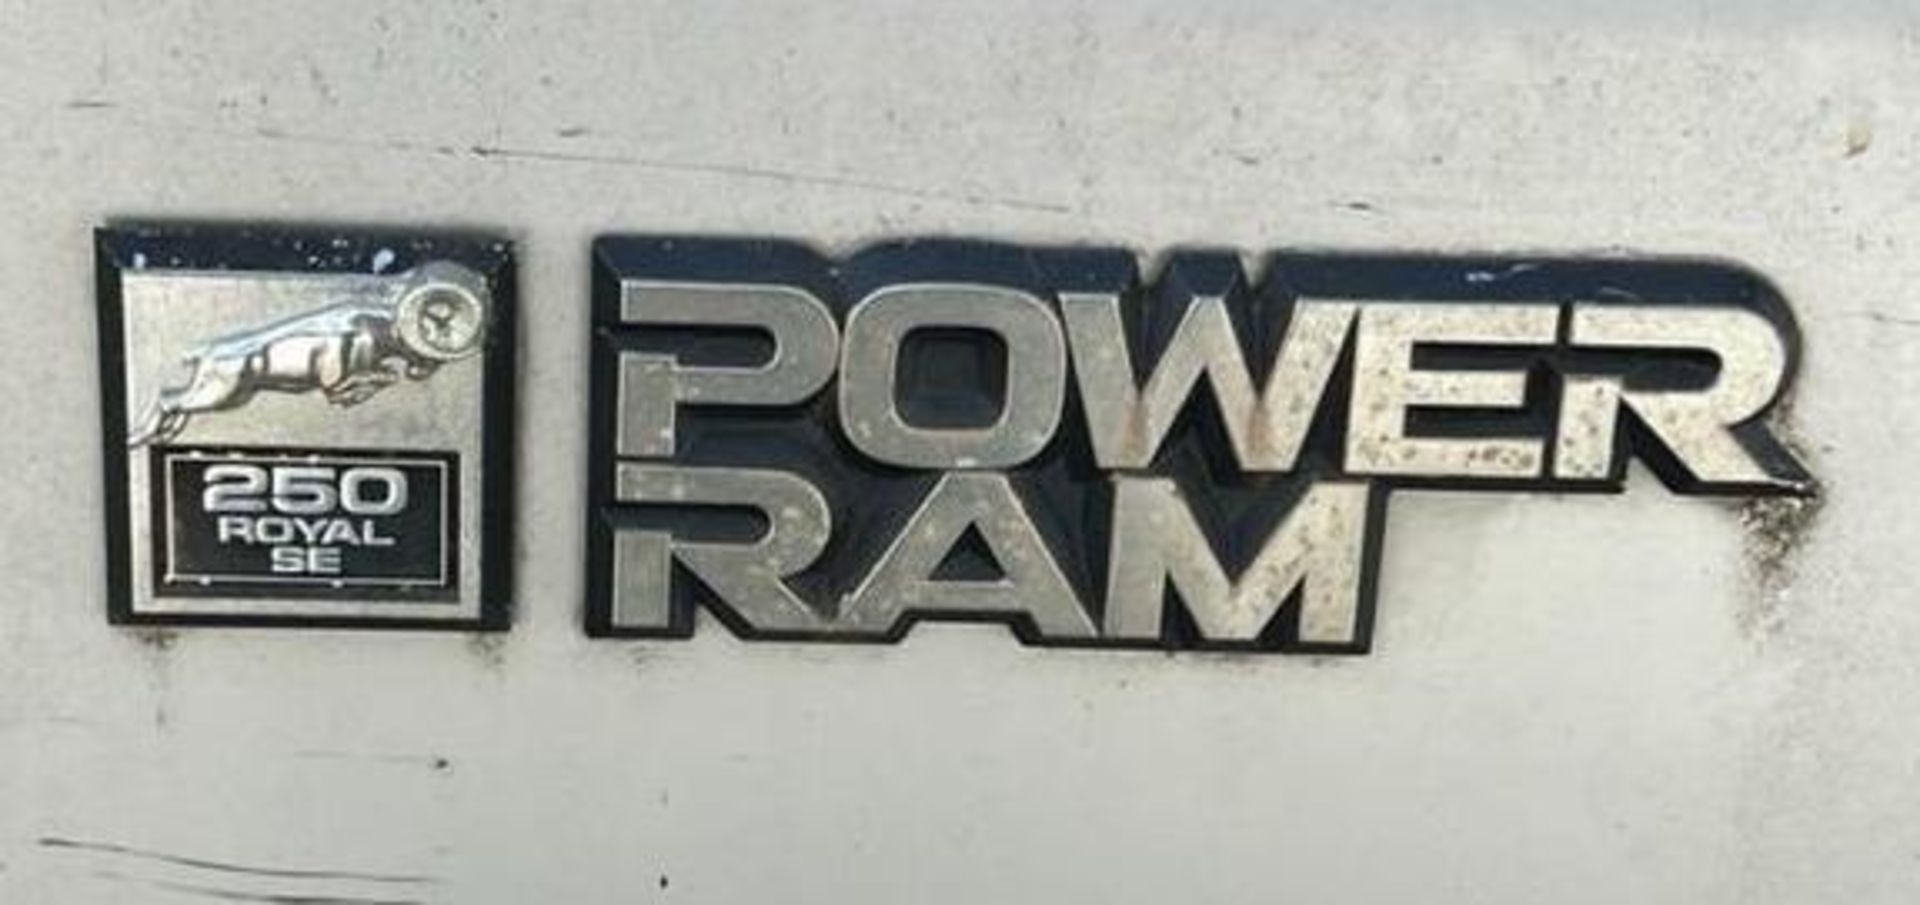 Dodge Power Ram 250 Royal SE w/ Fisher Snow Plow - Image 3 of 8